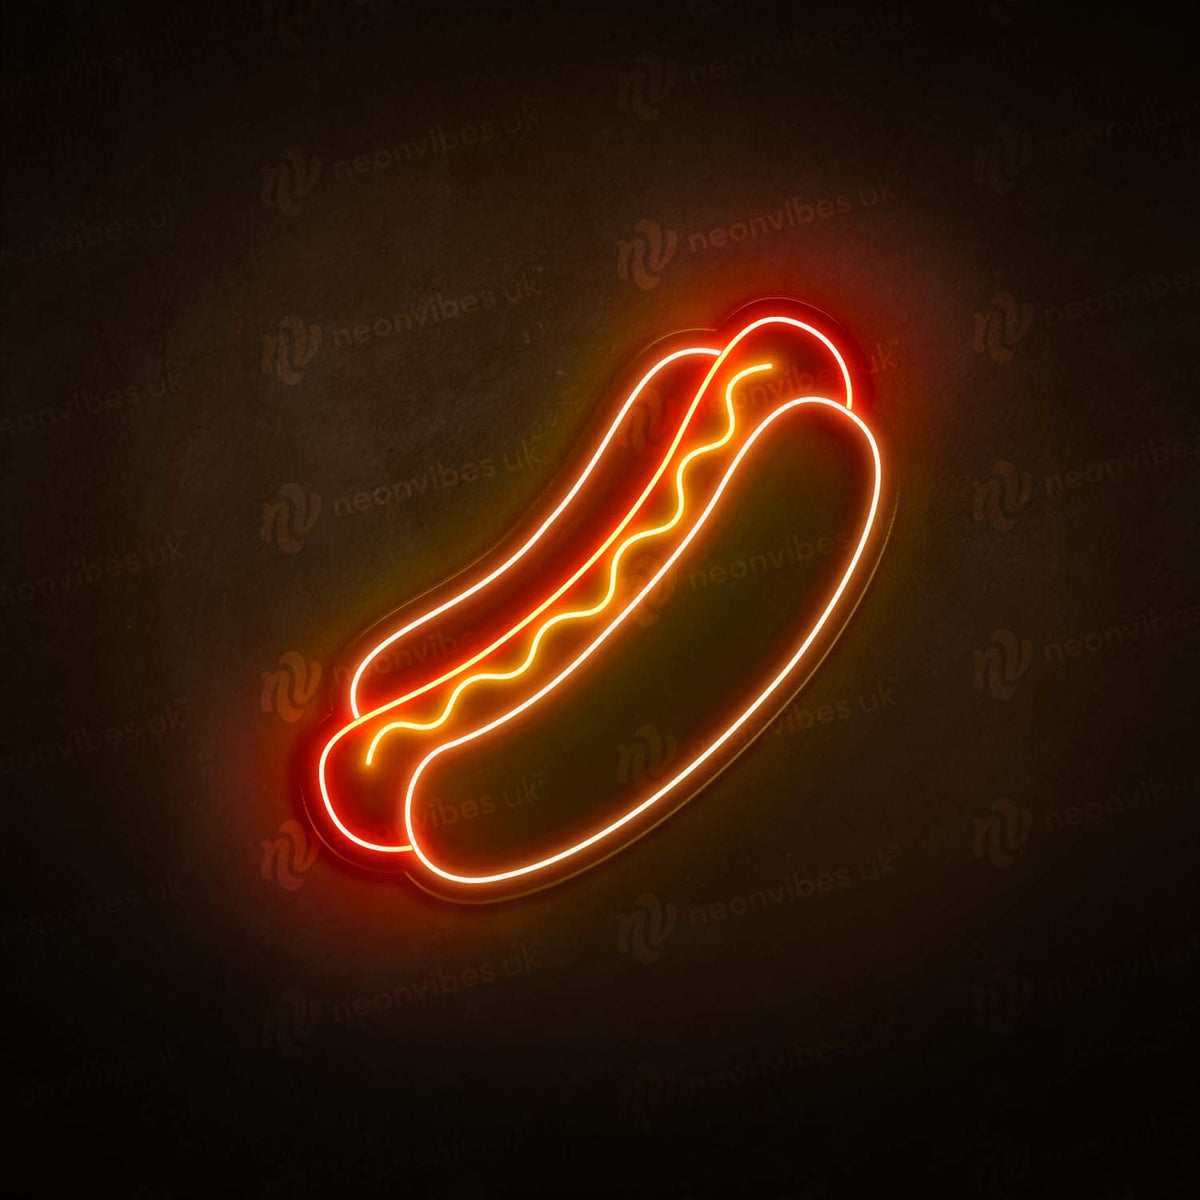 Hot Dog neon sign